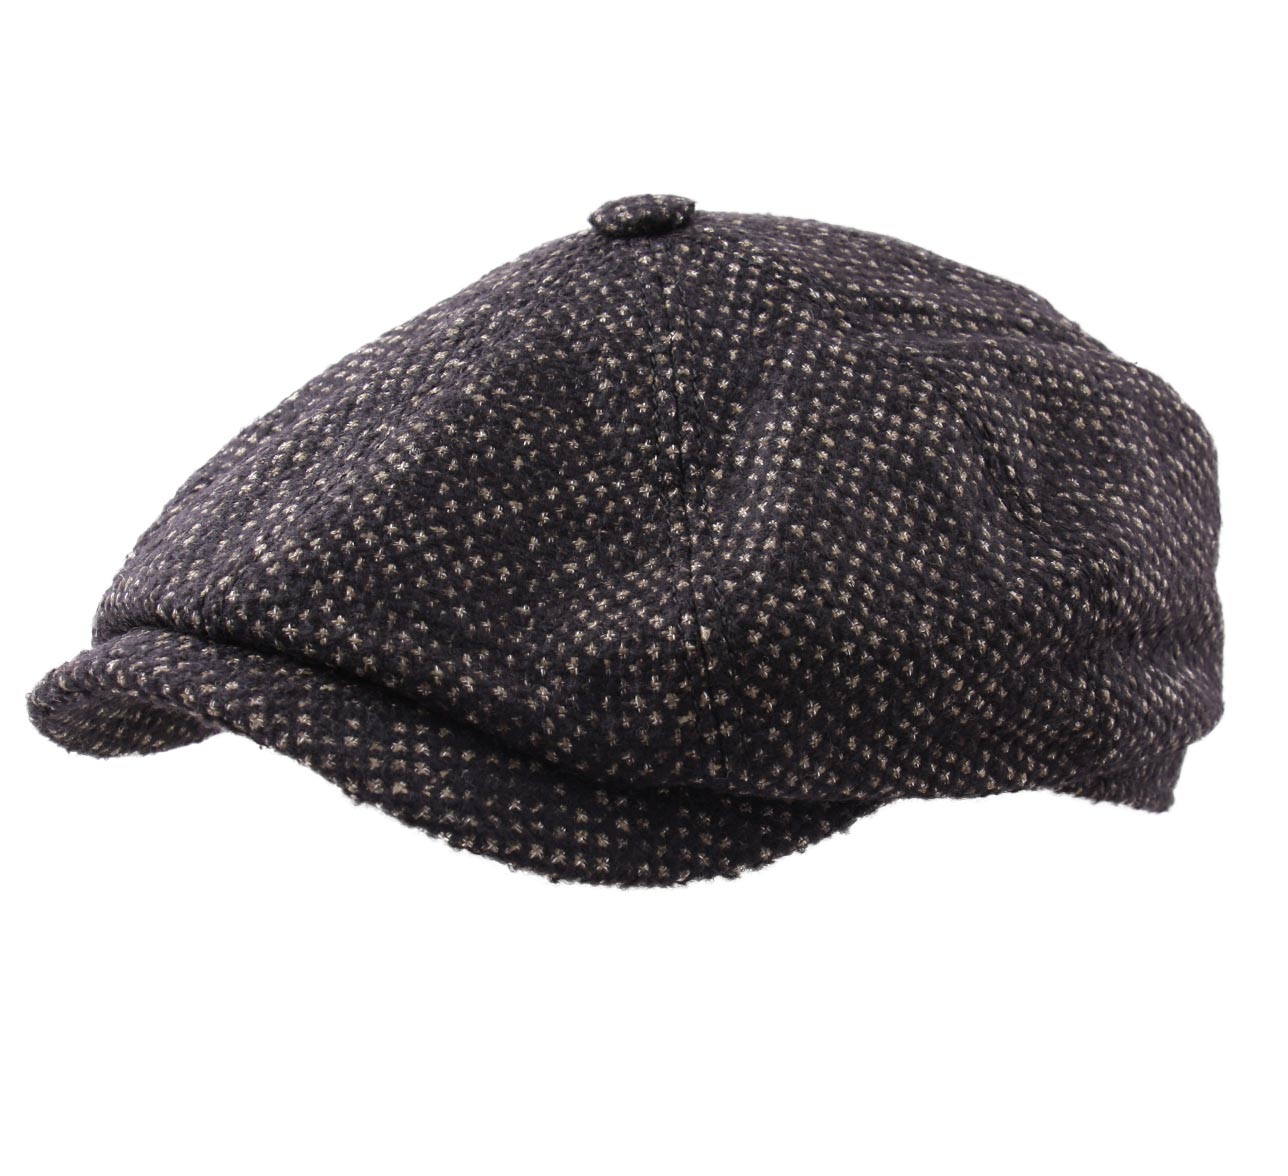 News Boy Hat Velvet Burnout Floral Black Gray Wool Blend Beret Cabby NWT DC745 